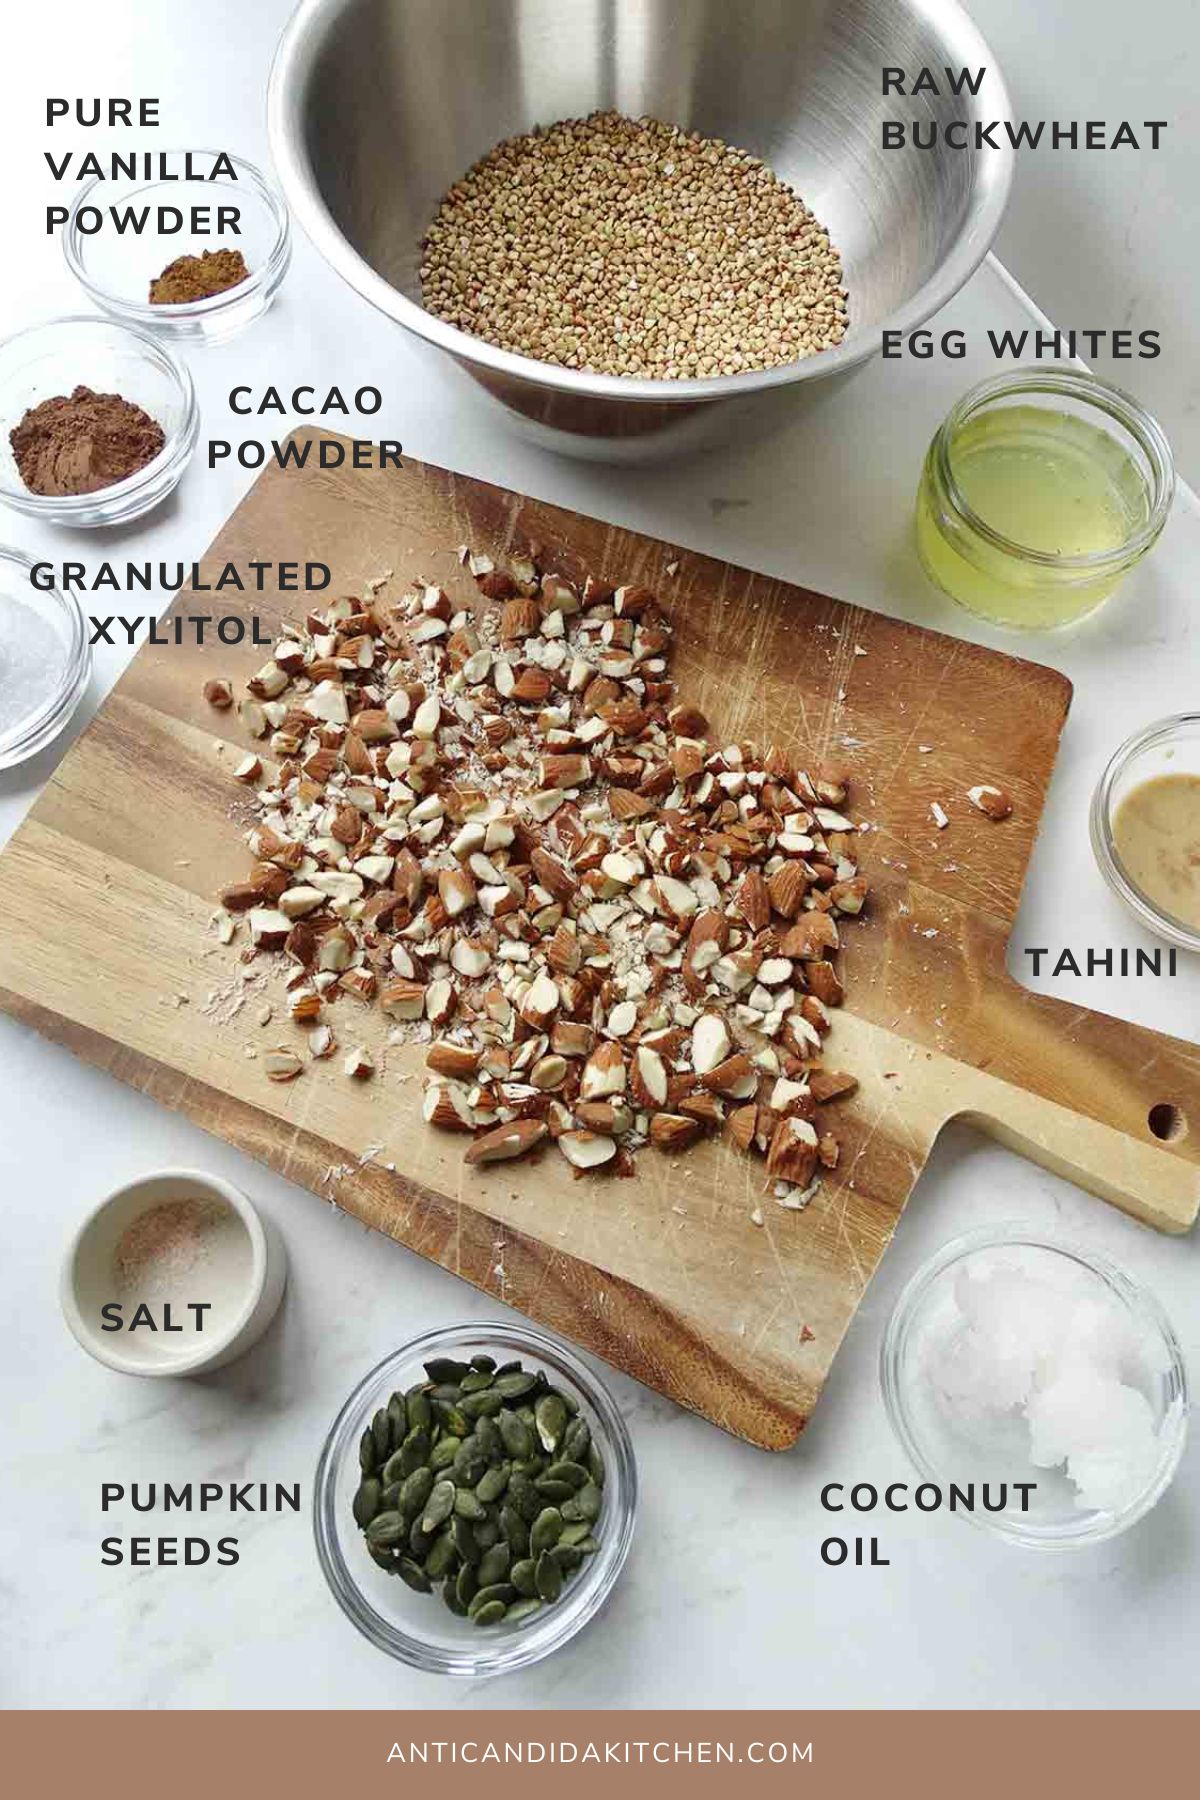 Chocolate and Buckwheat Gluten Free Granola - Ingredients